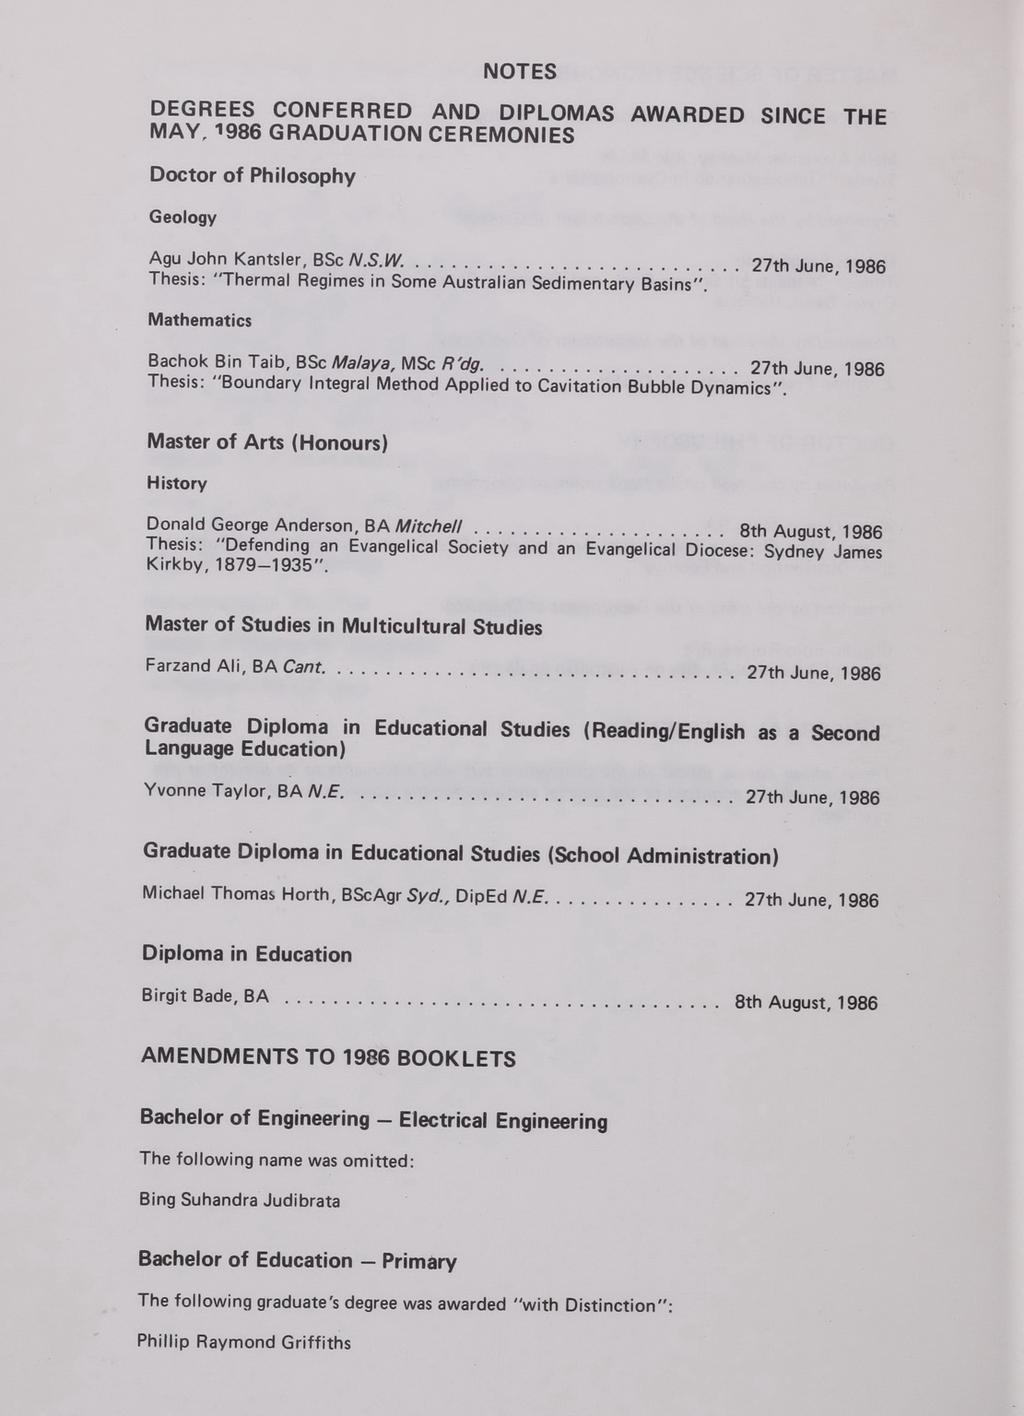 NOTES OEGREES CONFERRED AND DIPLOMAS AWARDED SINCE THE MAY, 1986 GRADUATION CEREMONIES Doctor of Philosophy Geology Agu John Kantsl er, BSc N.S.W.... 27th June, 1986 Thesi s: "Thermal Regimes in Some Australian Sedimentary Basins ", Mathematics Bachok Bin Ta ib, BSc Malaya, MSc R 'dg.